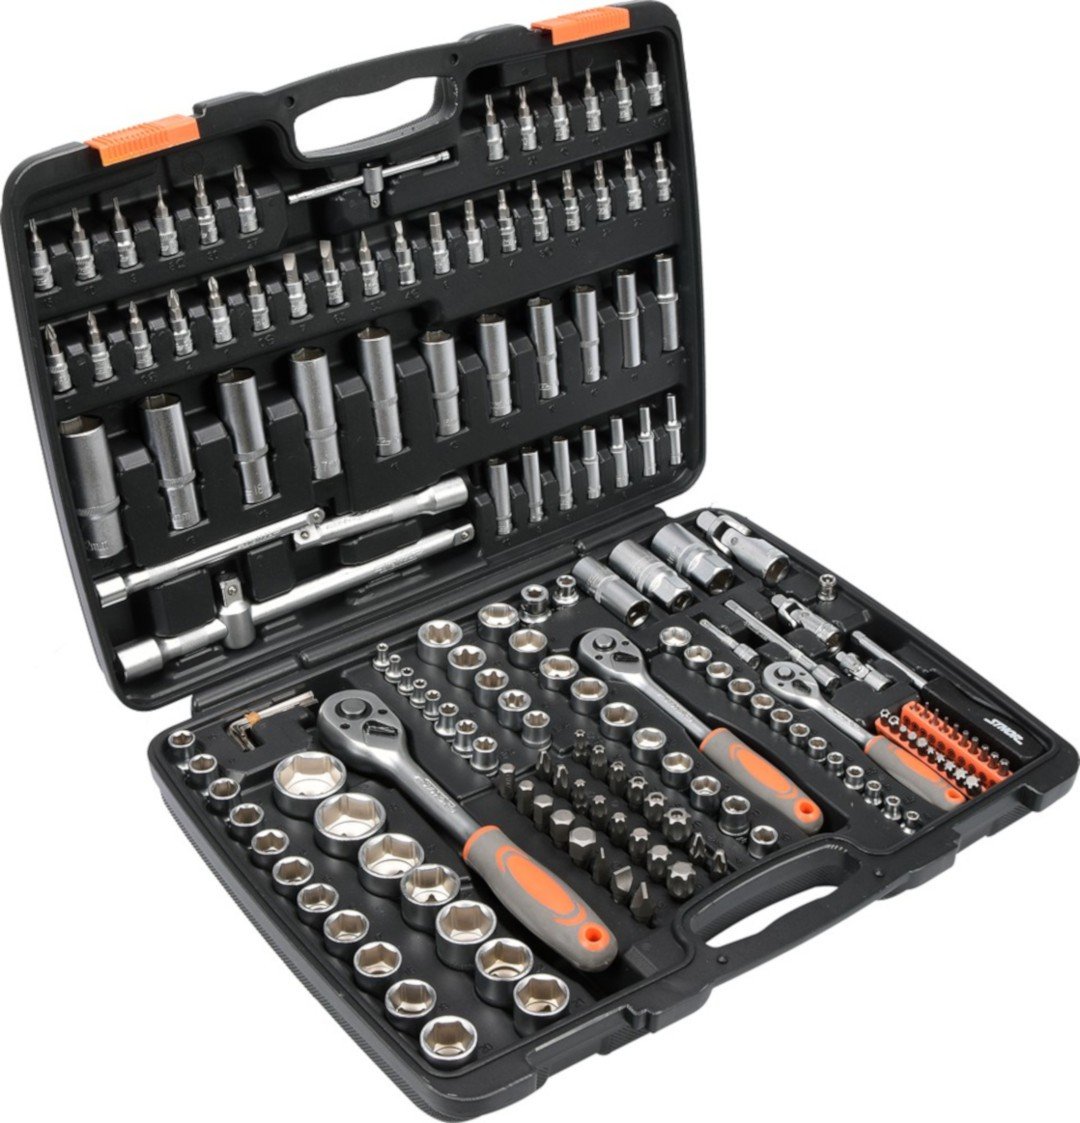 Tool kit STHOR 58688 - 173 parts XXL